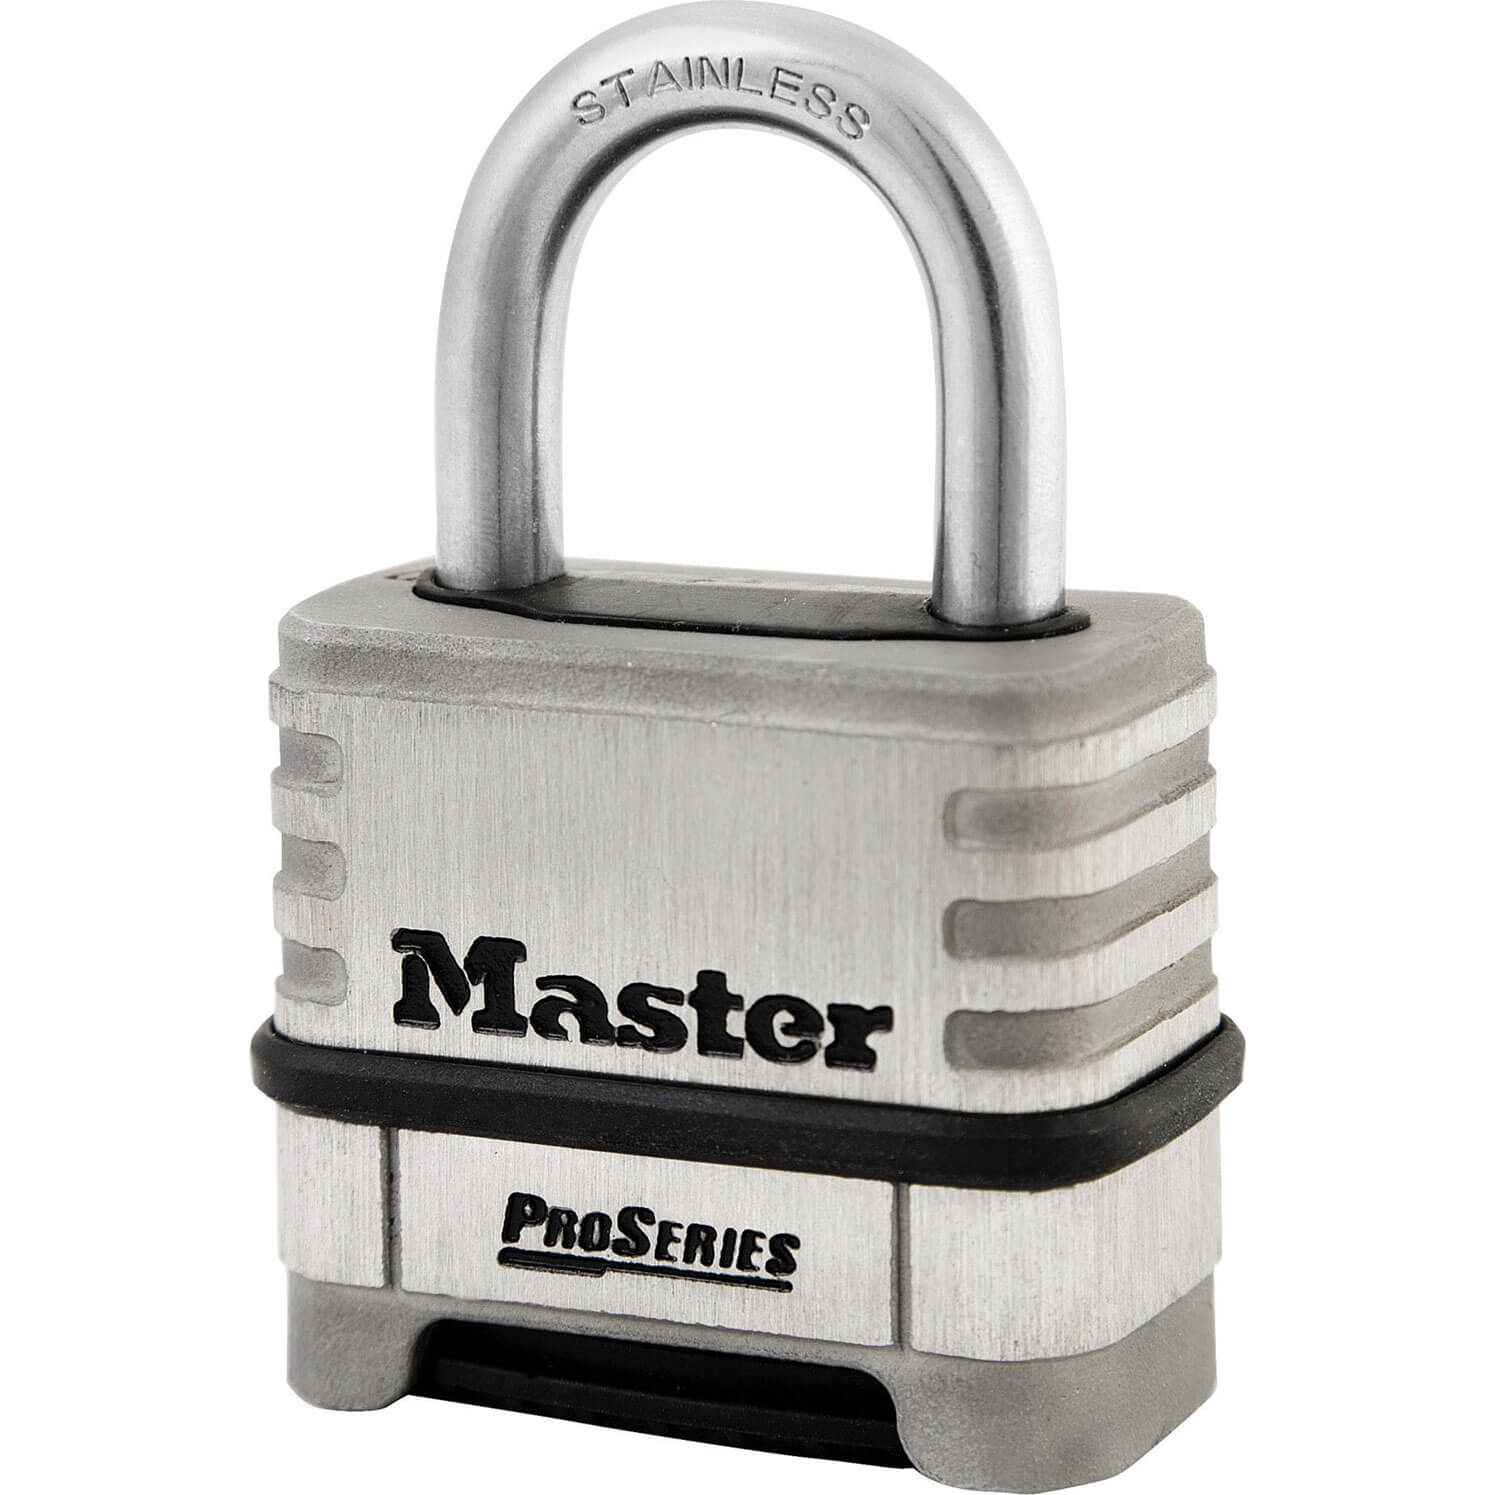 Image of Masterlock Pro Series Stainless Steel Combination Padlock 57mm Standard